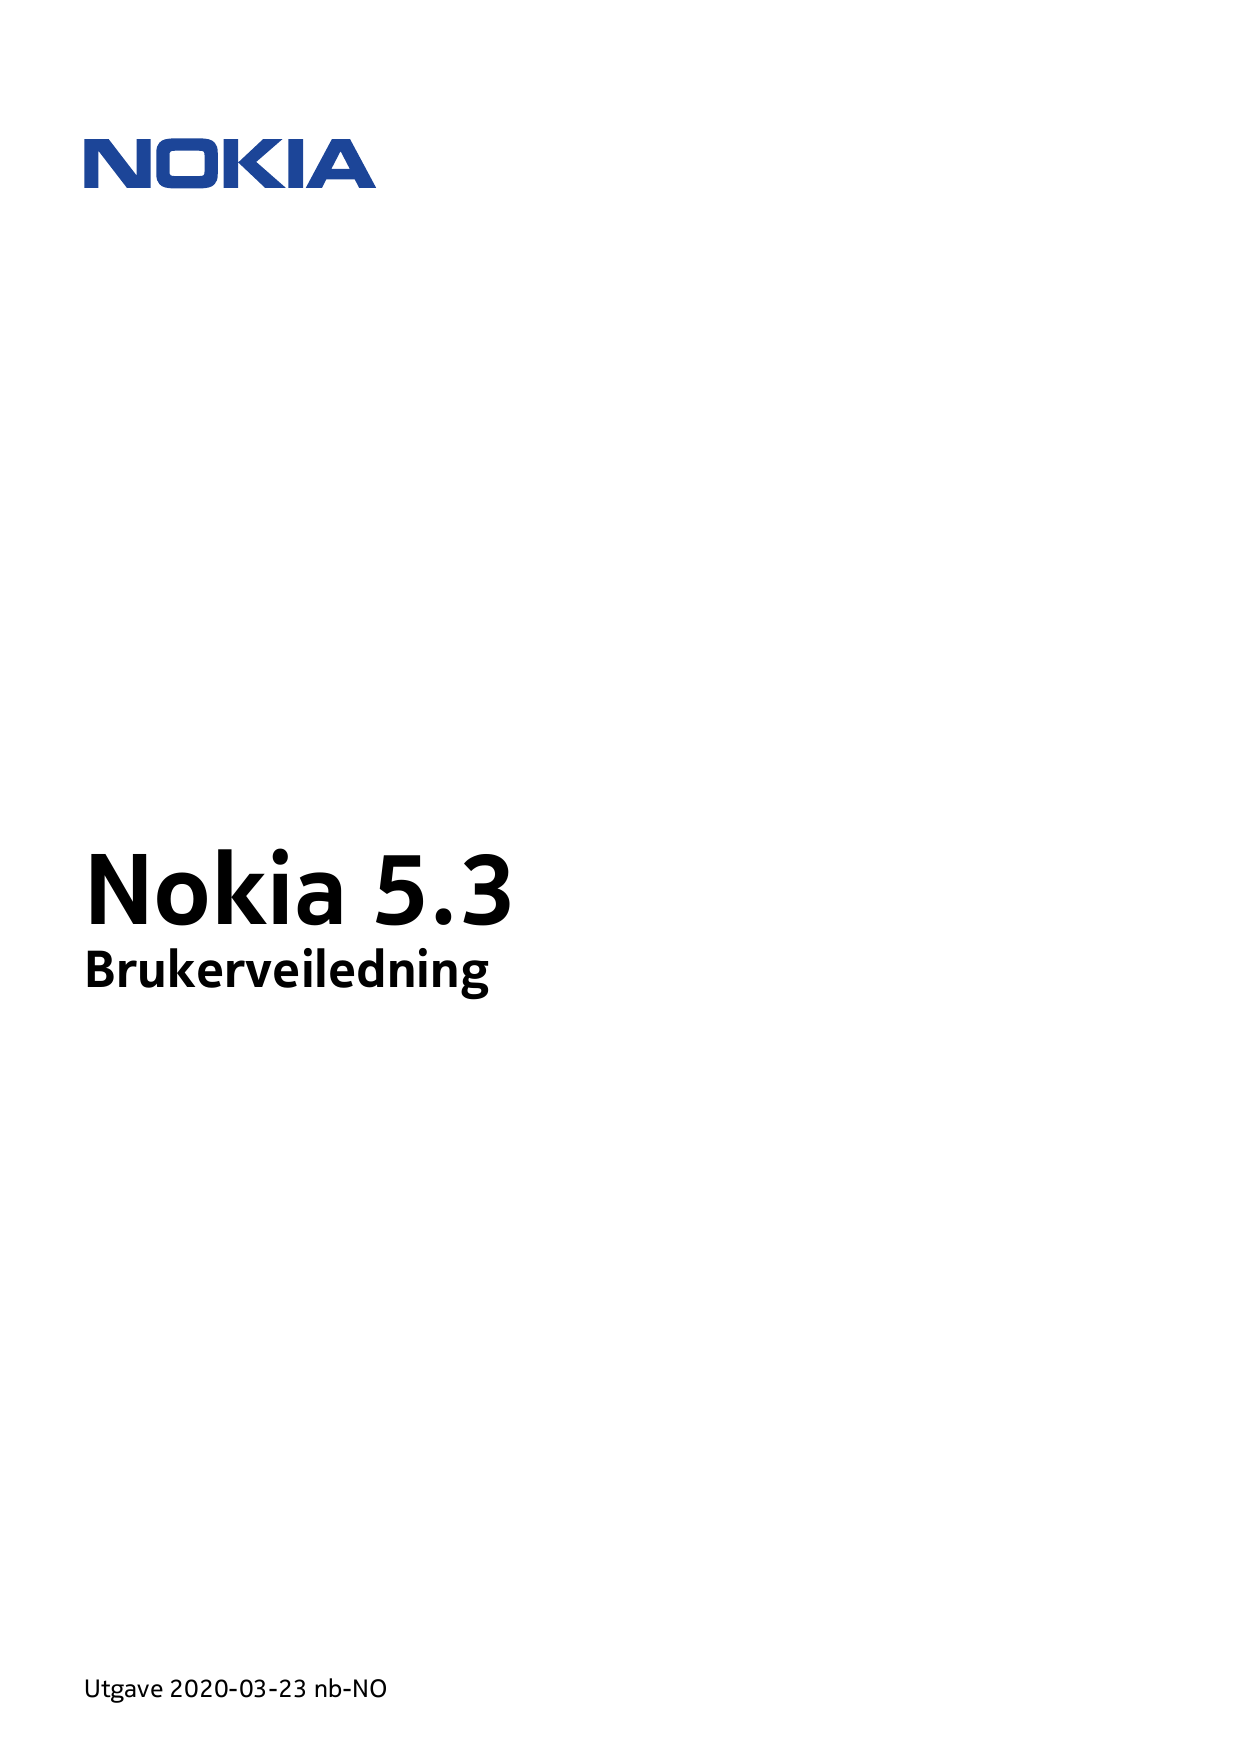 Nokia 5.3BrukerveiledningUtgave 2020-03-23 nb-NO